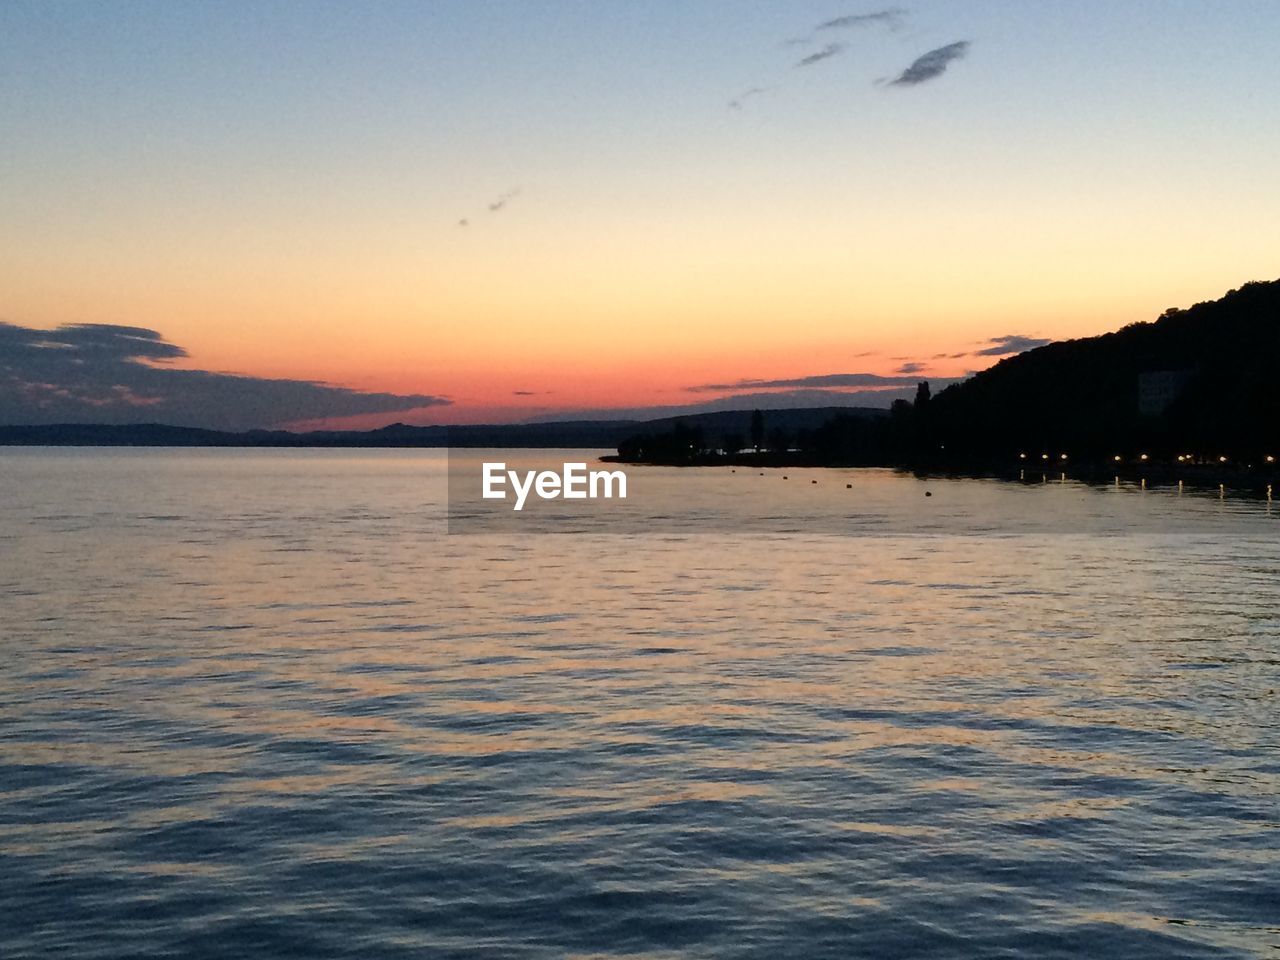 Scenic view of lake balaton against sunset sky